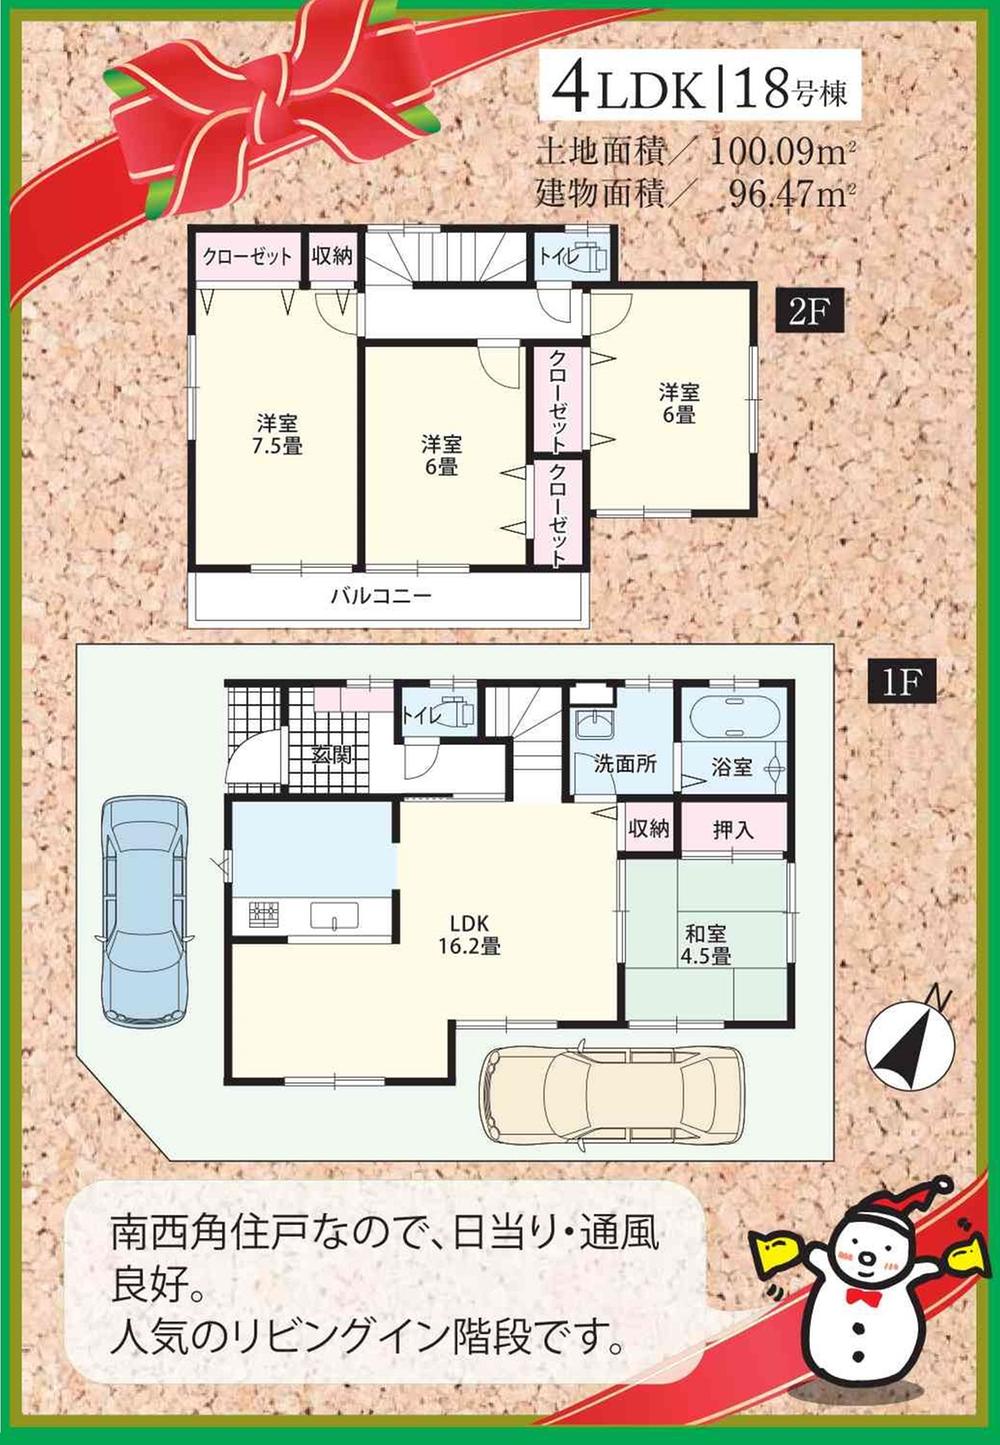 Floor plan. (18 section), Price 32,800,000 yen, 4LDK, Land area 100.09 sq m , Building area 96.47 sq m